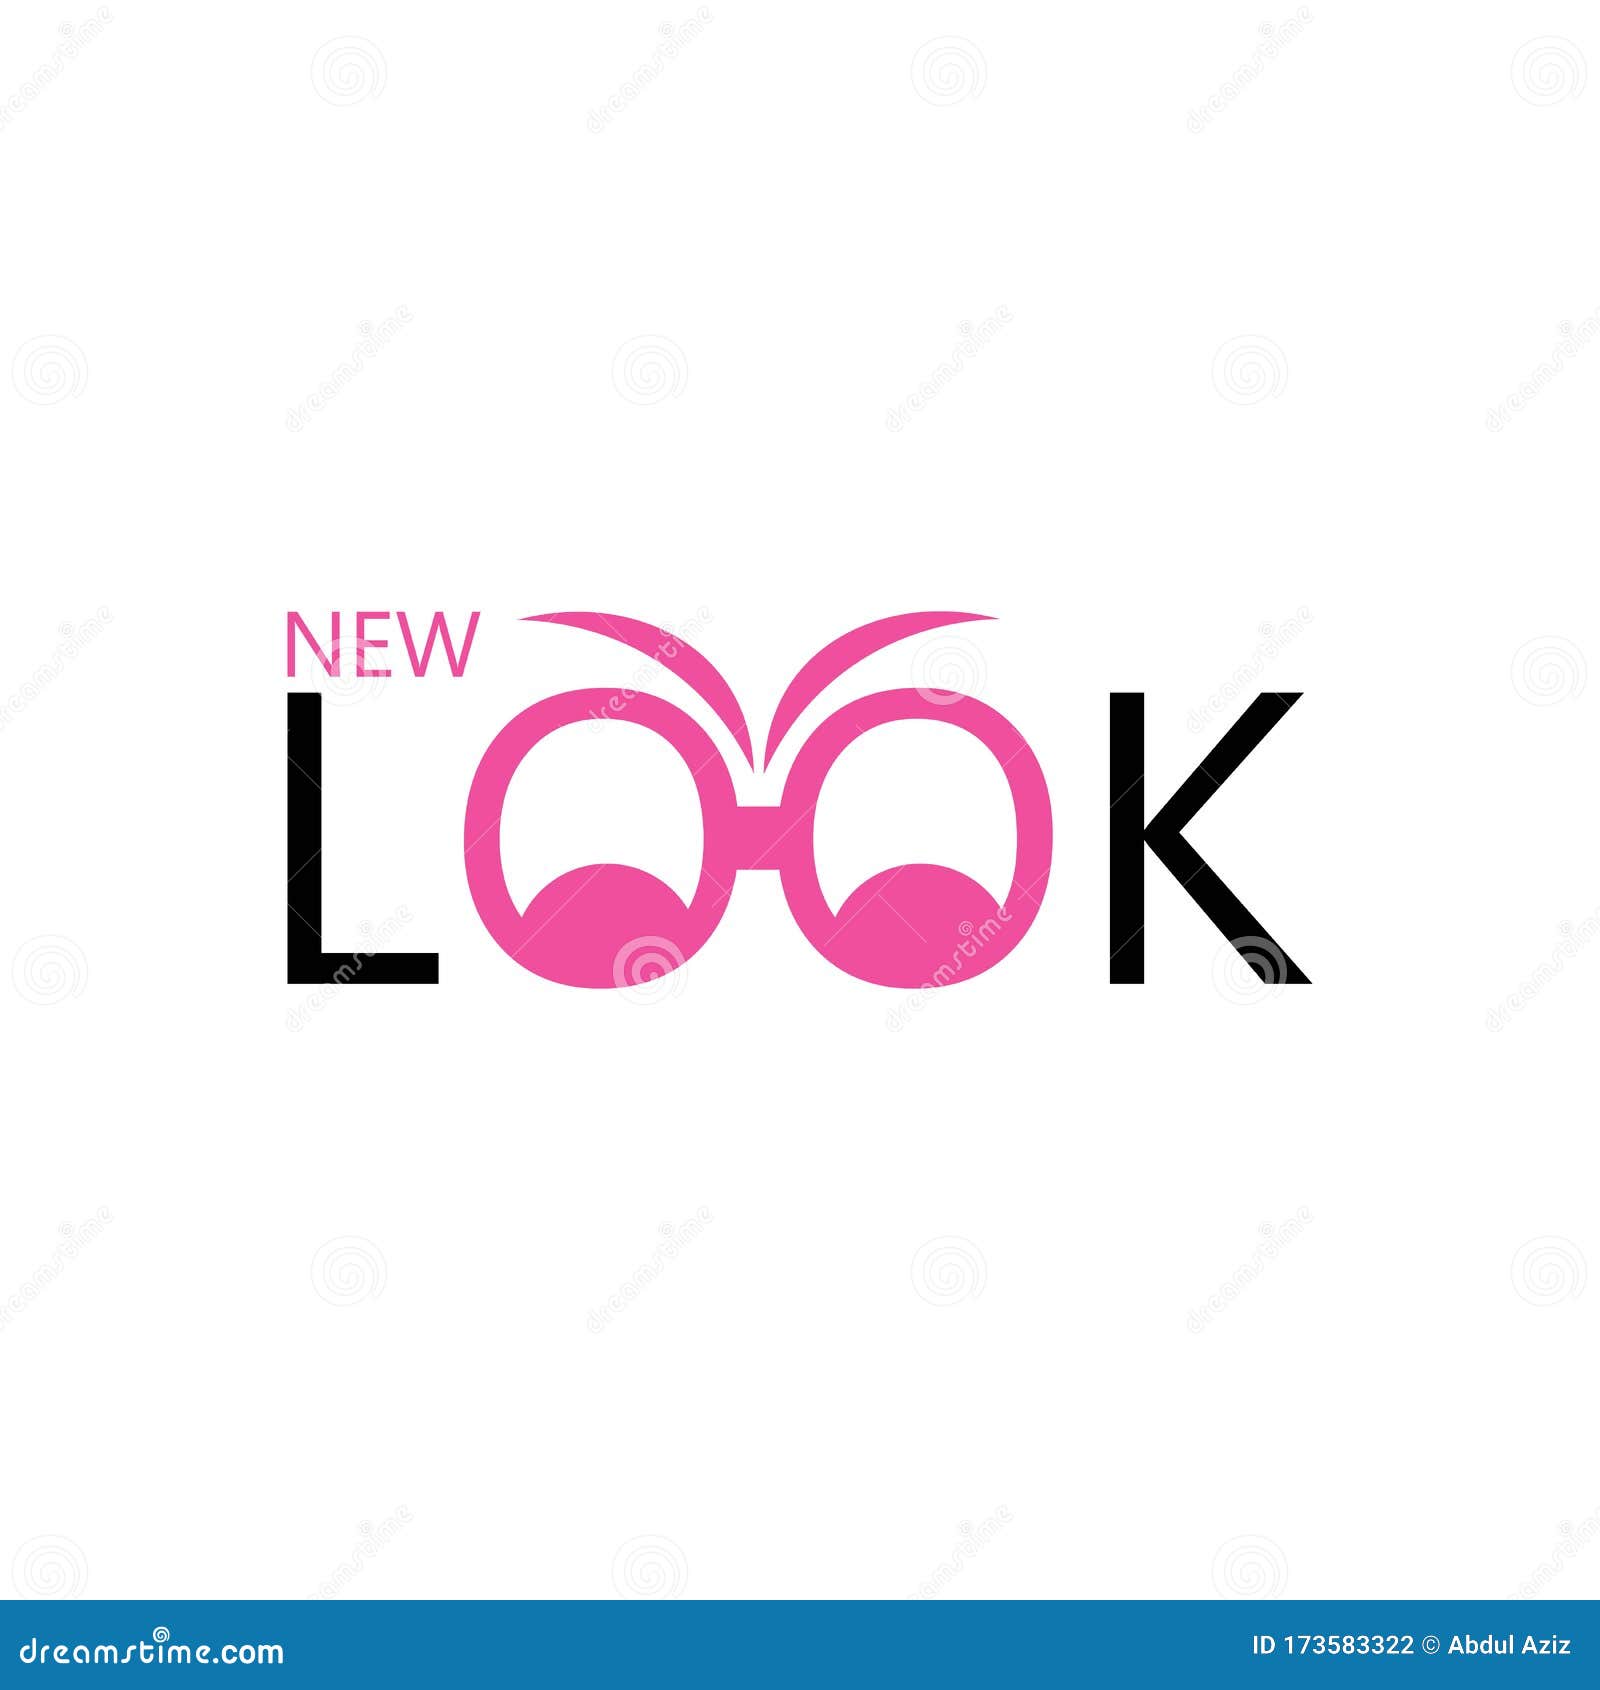 New look logo vector stock illustration. Illustration of business -  173583322